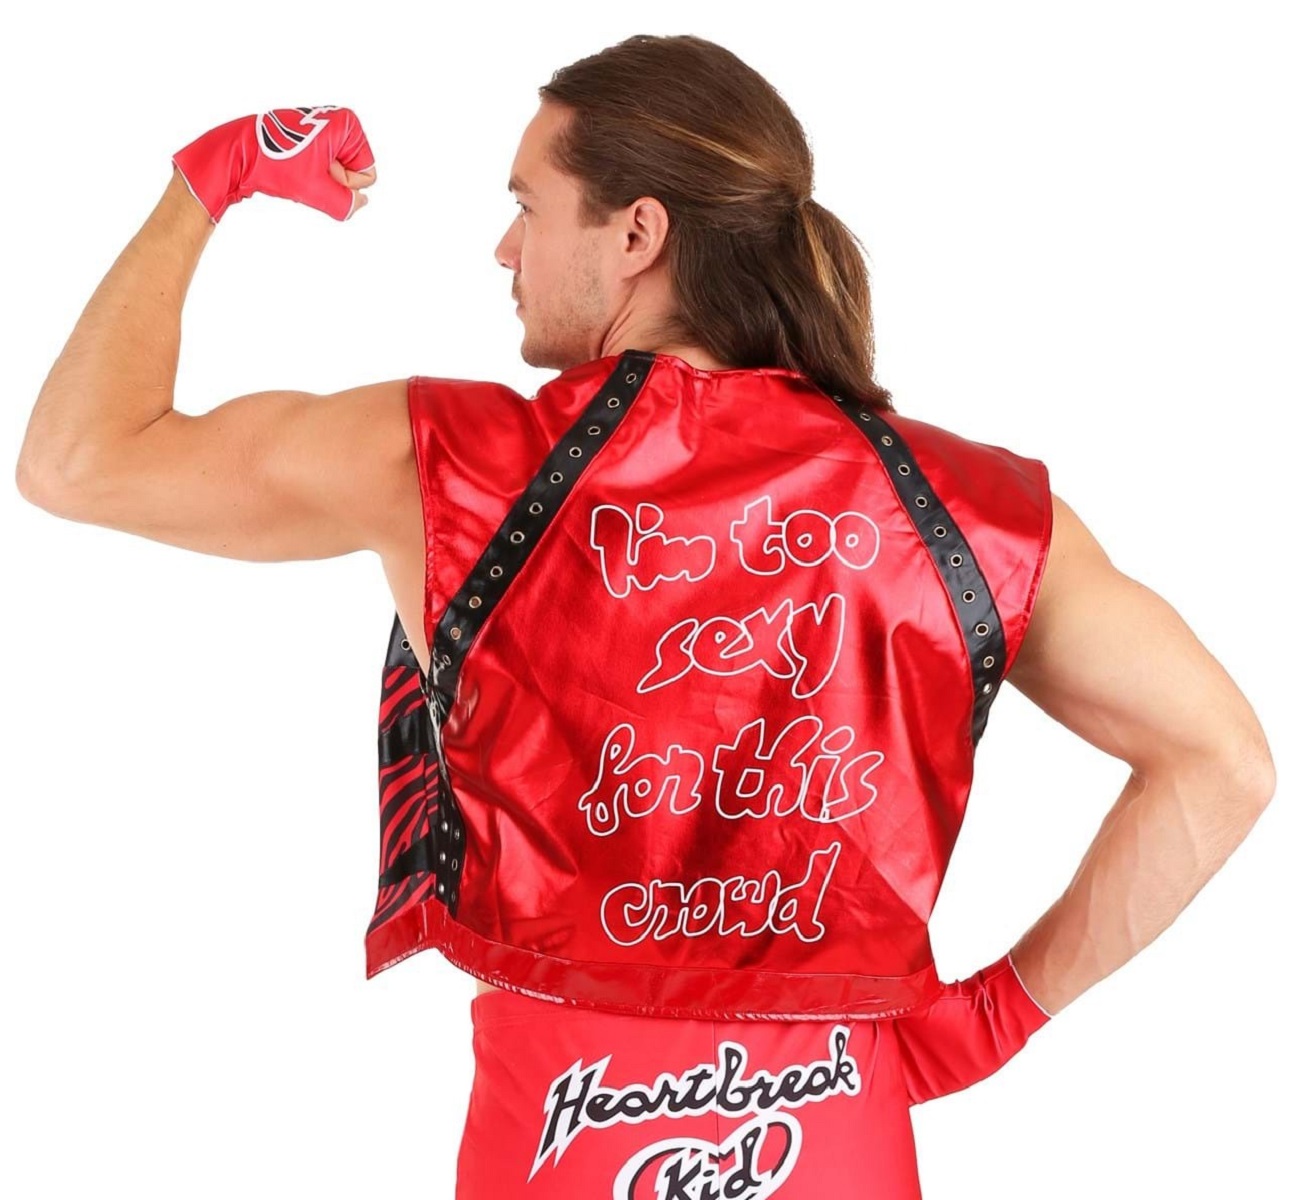 The Heartbreak Kid Shawn Michaels Costume Vest